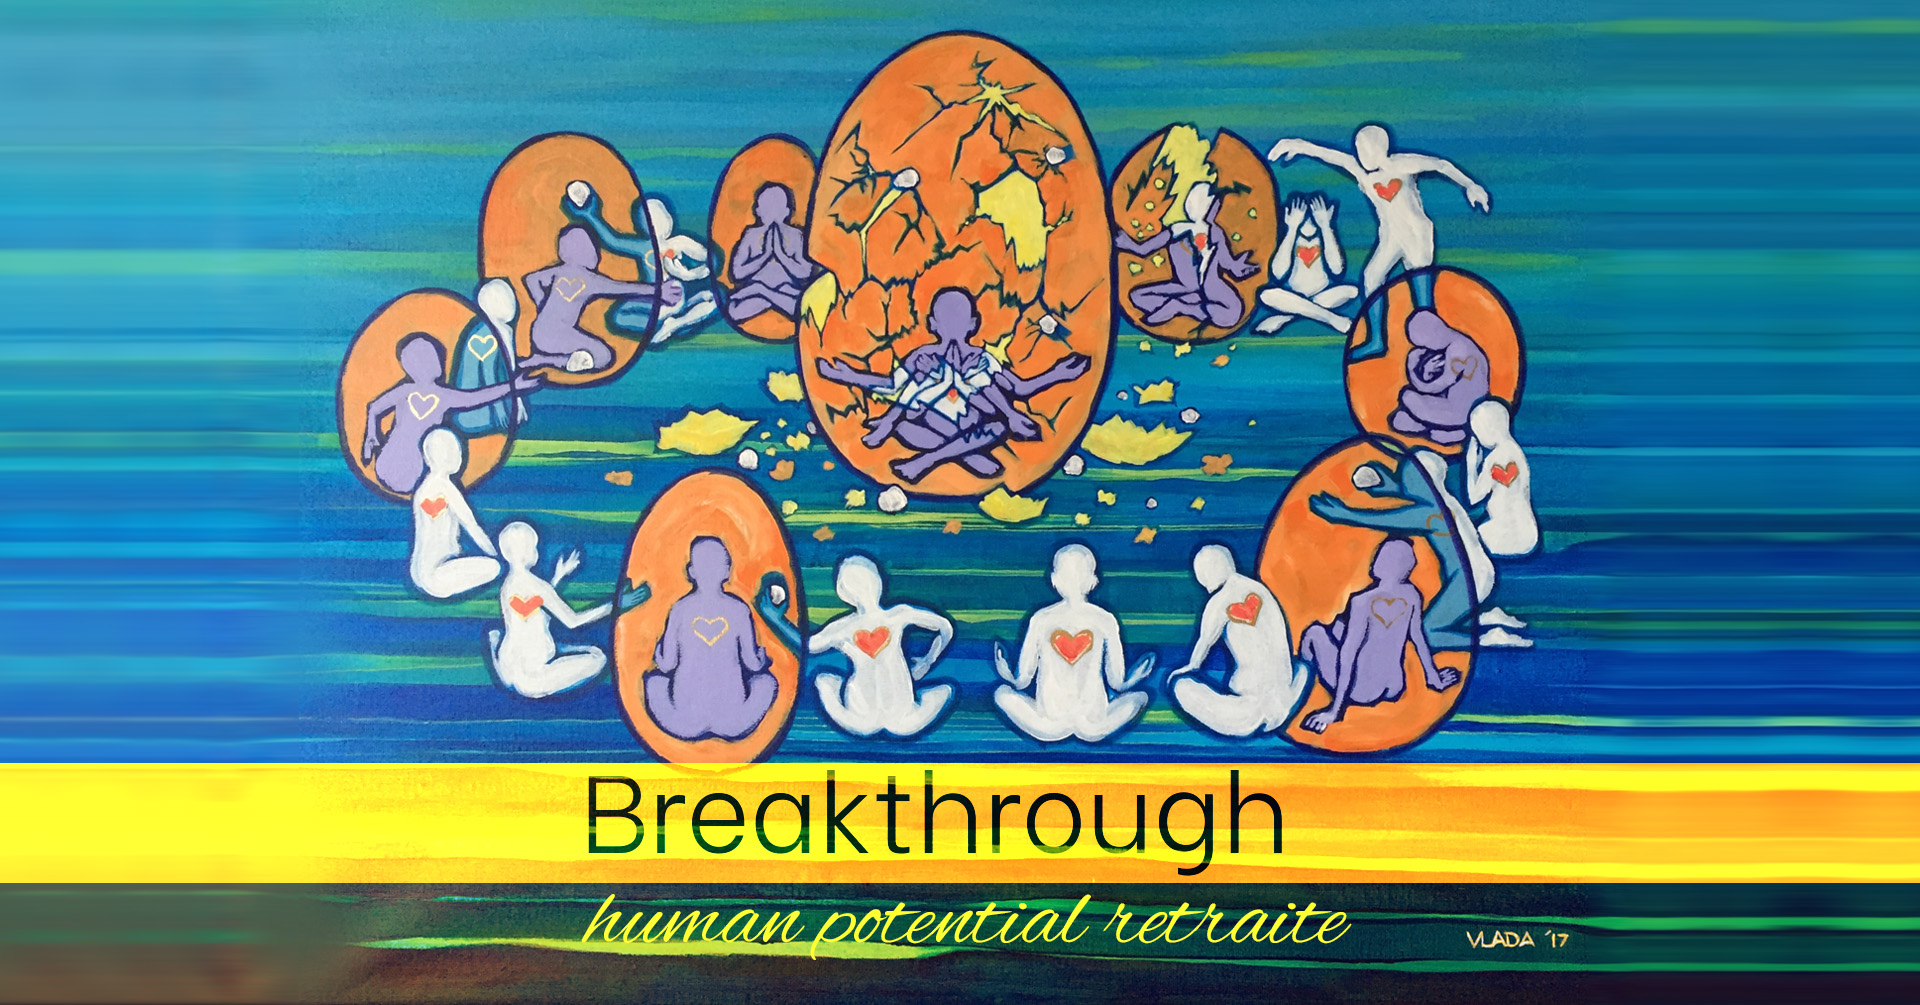 breakethrough retraite